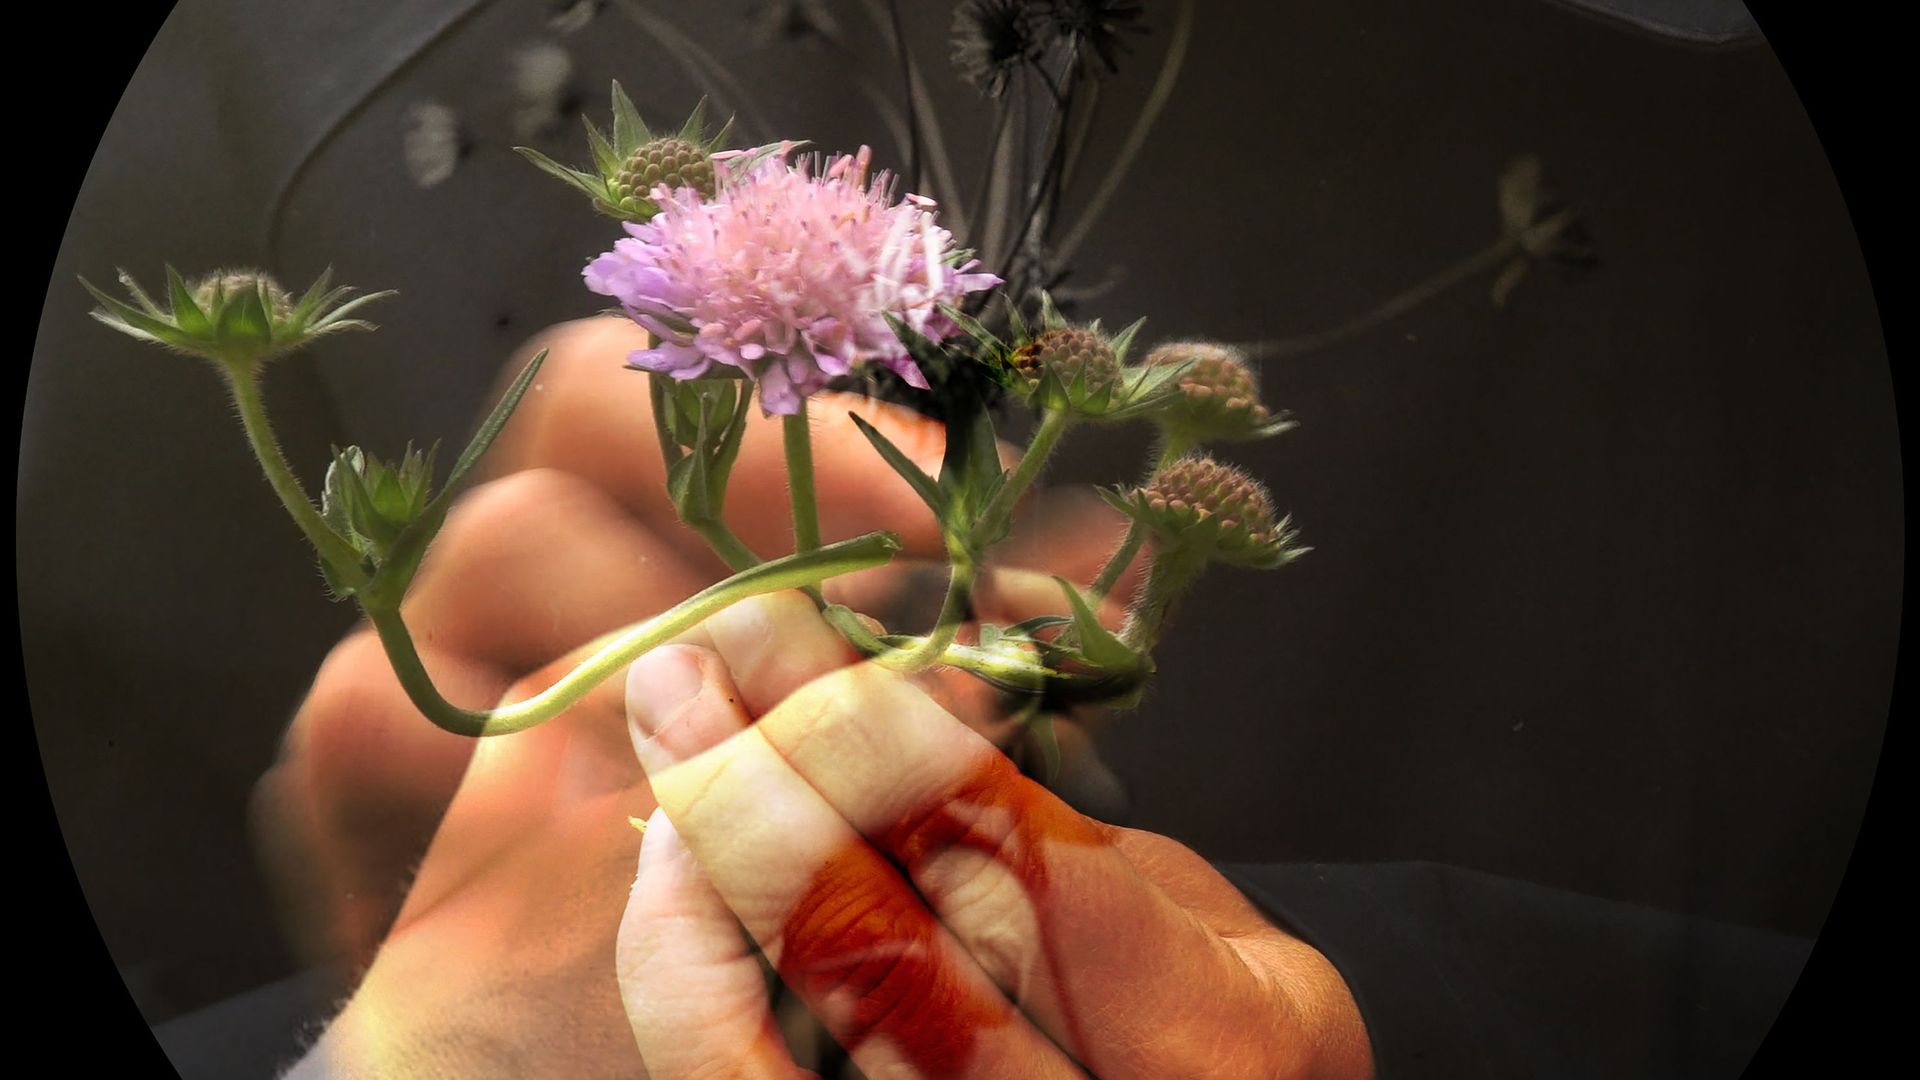 Image de la video “Meeting a flower halfway”, Eitan Efrat & Sirah Foighel Brutmann - 2021. Courtesy the artist